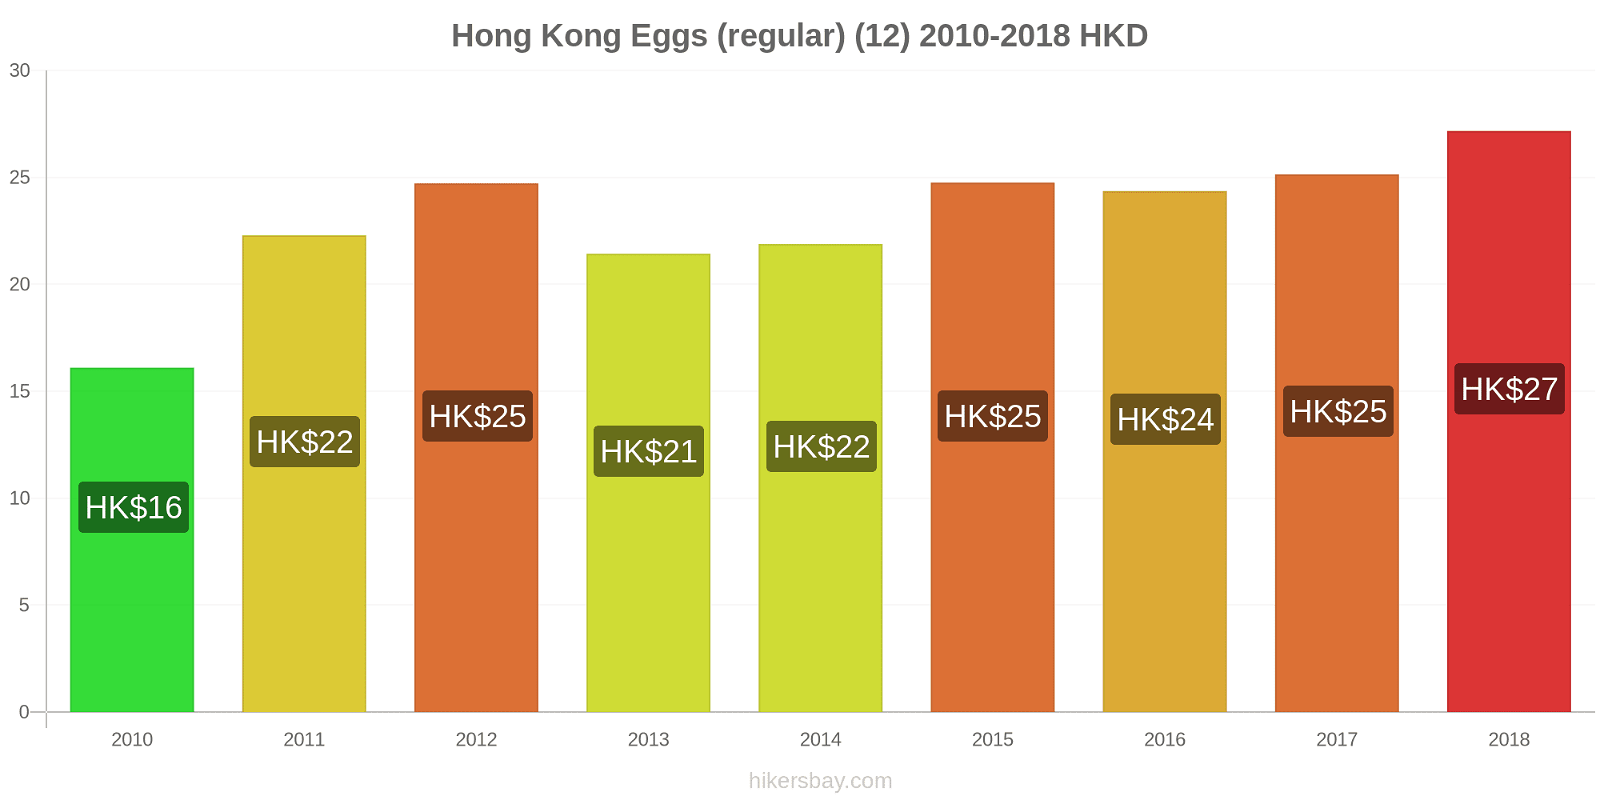 Hong Kong price changes Eggs (regular) (12) hikersbay.com